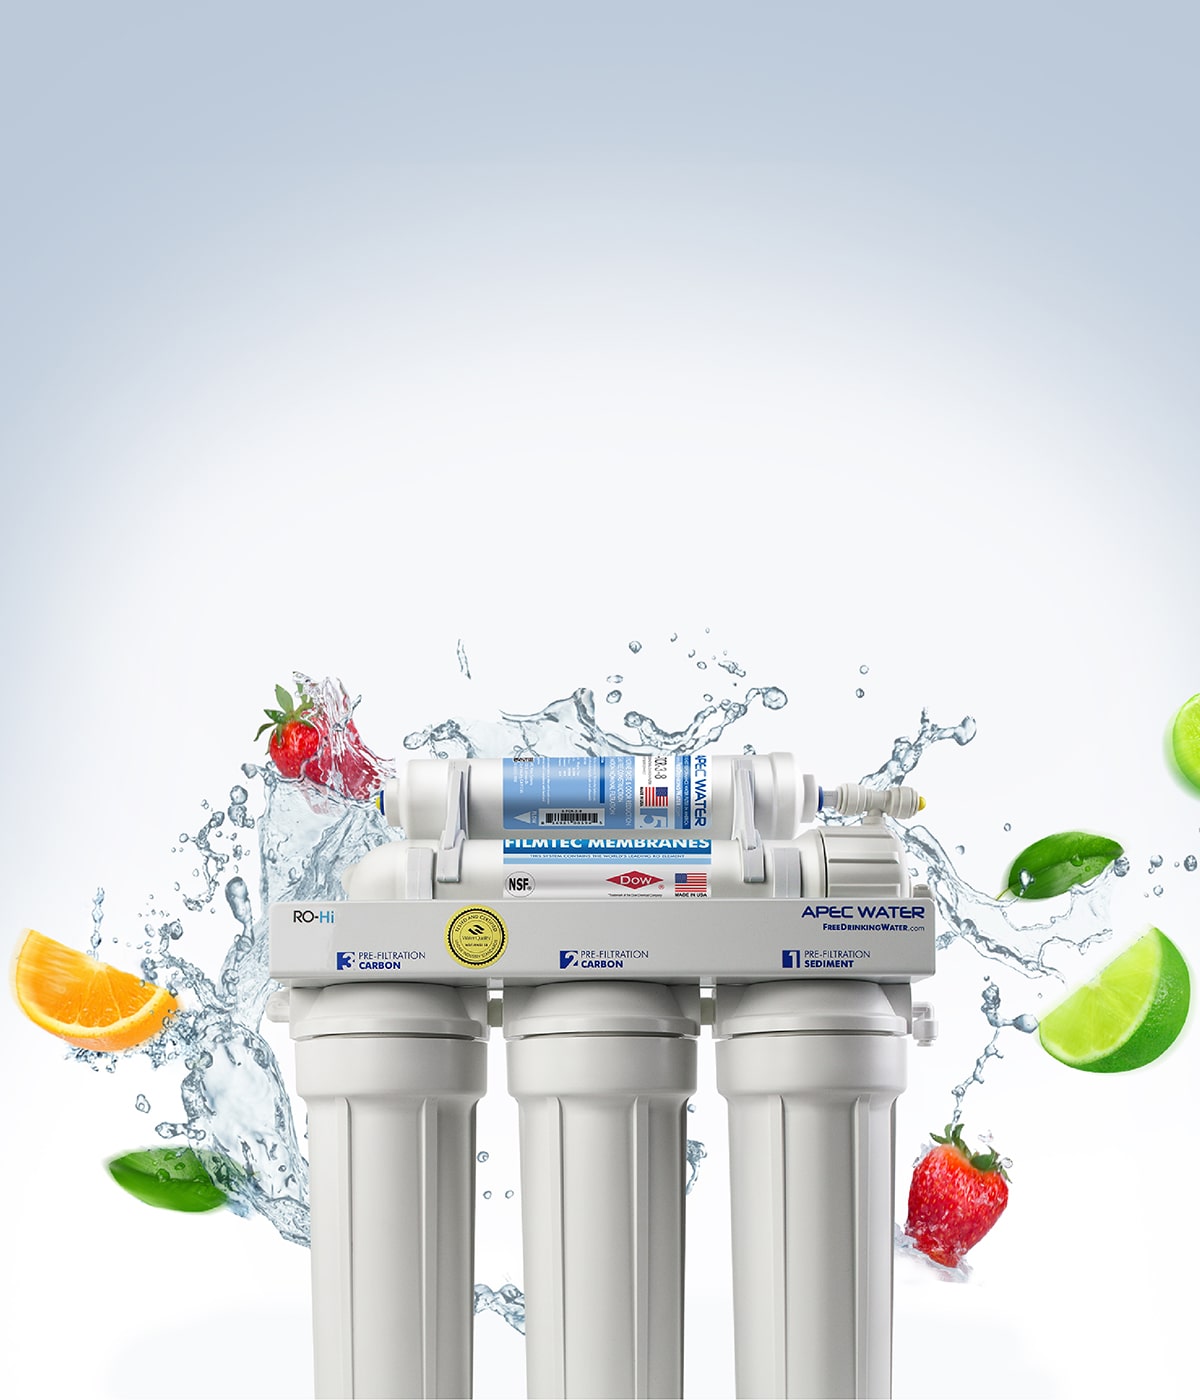 reverse osmosis water filter landing page apec water mobile